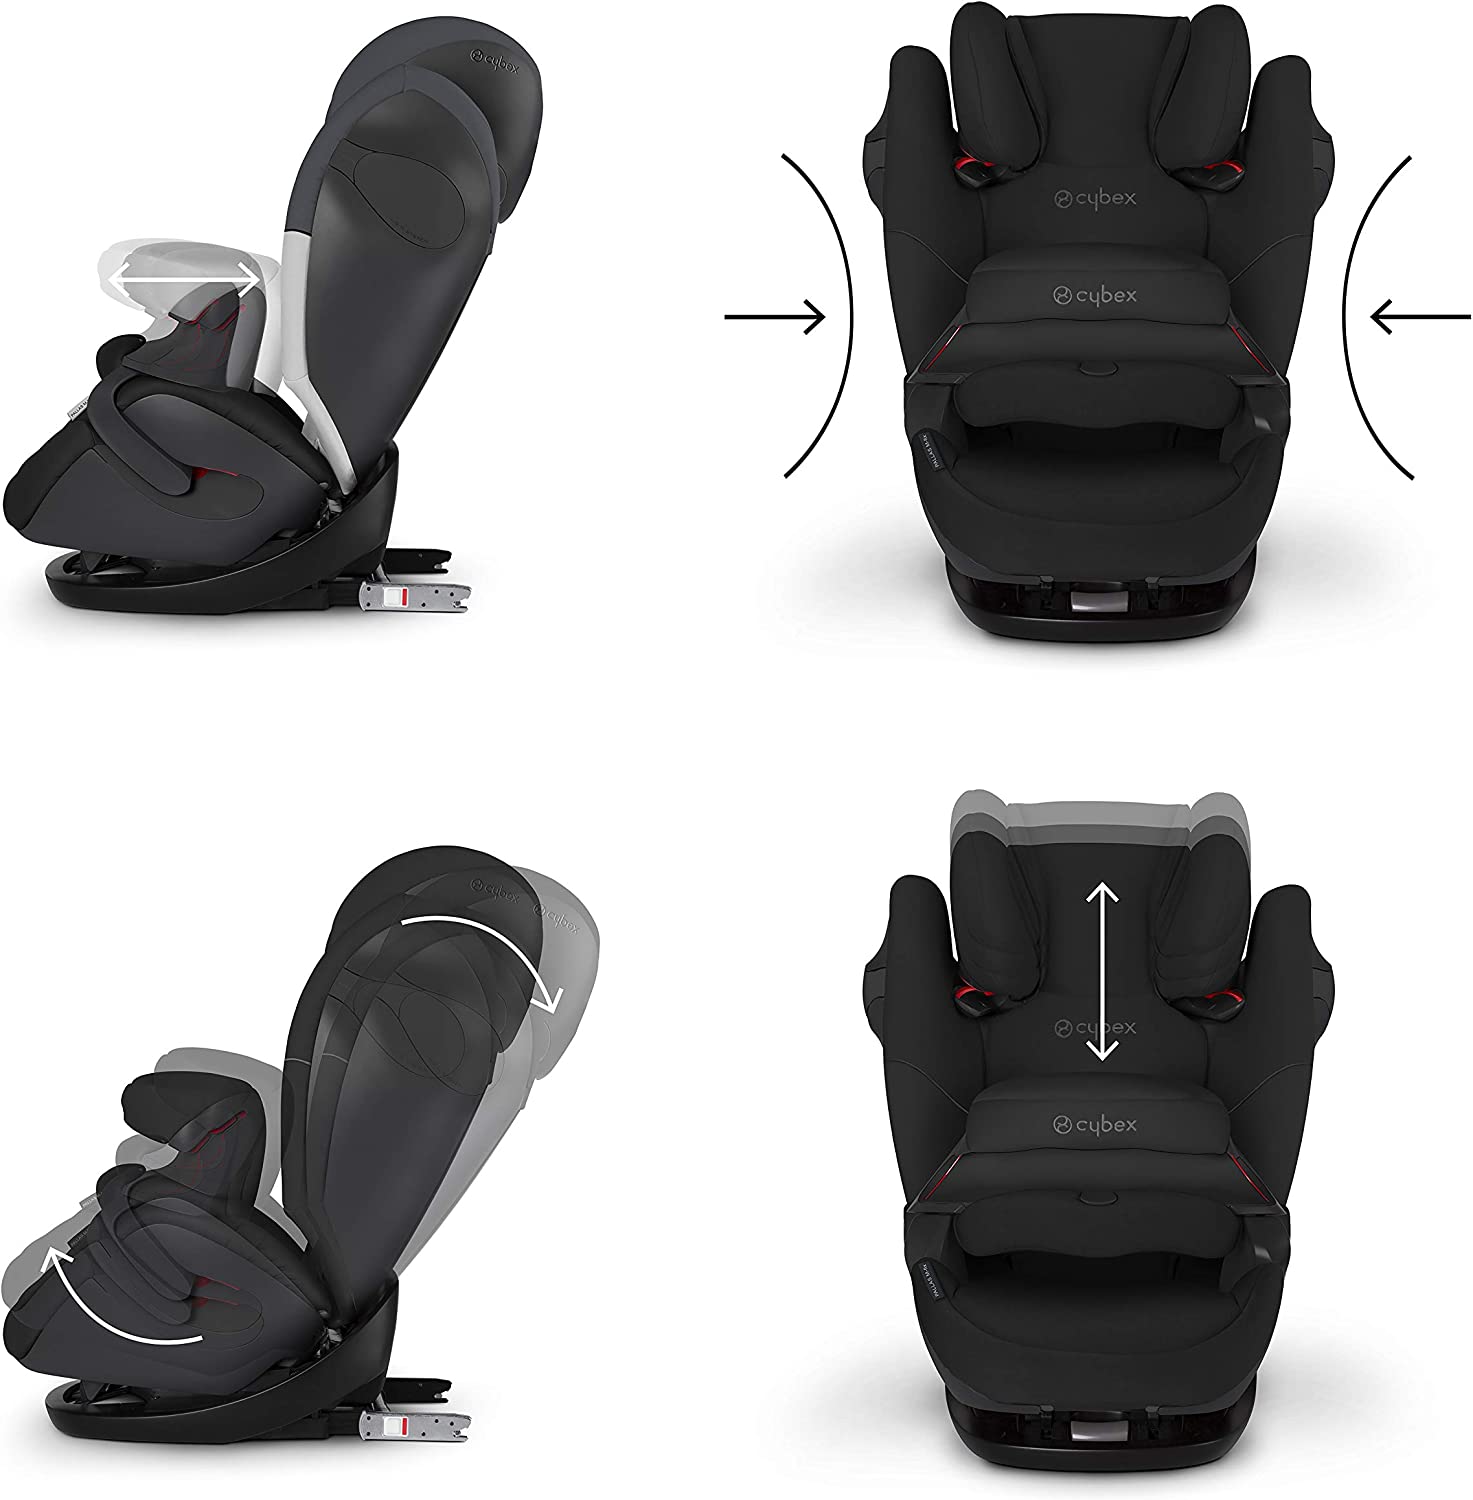 Products: Cybex Pallas M-Fix child seat